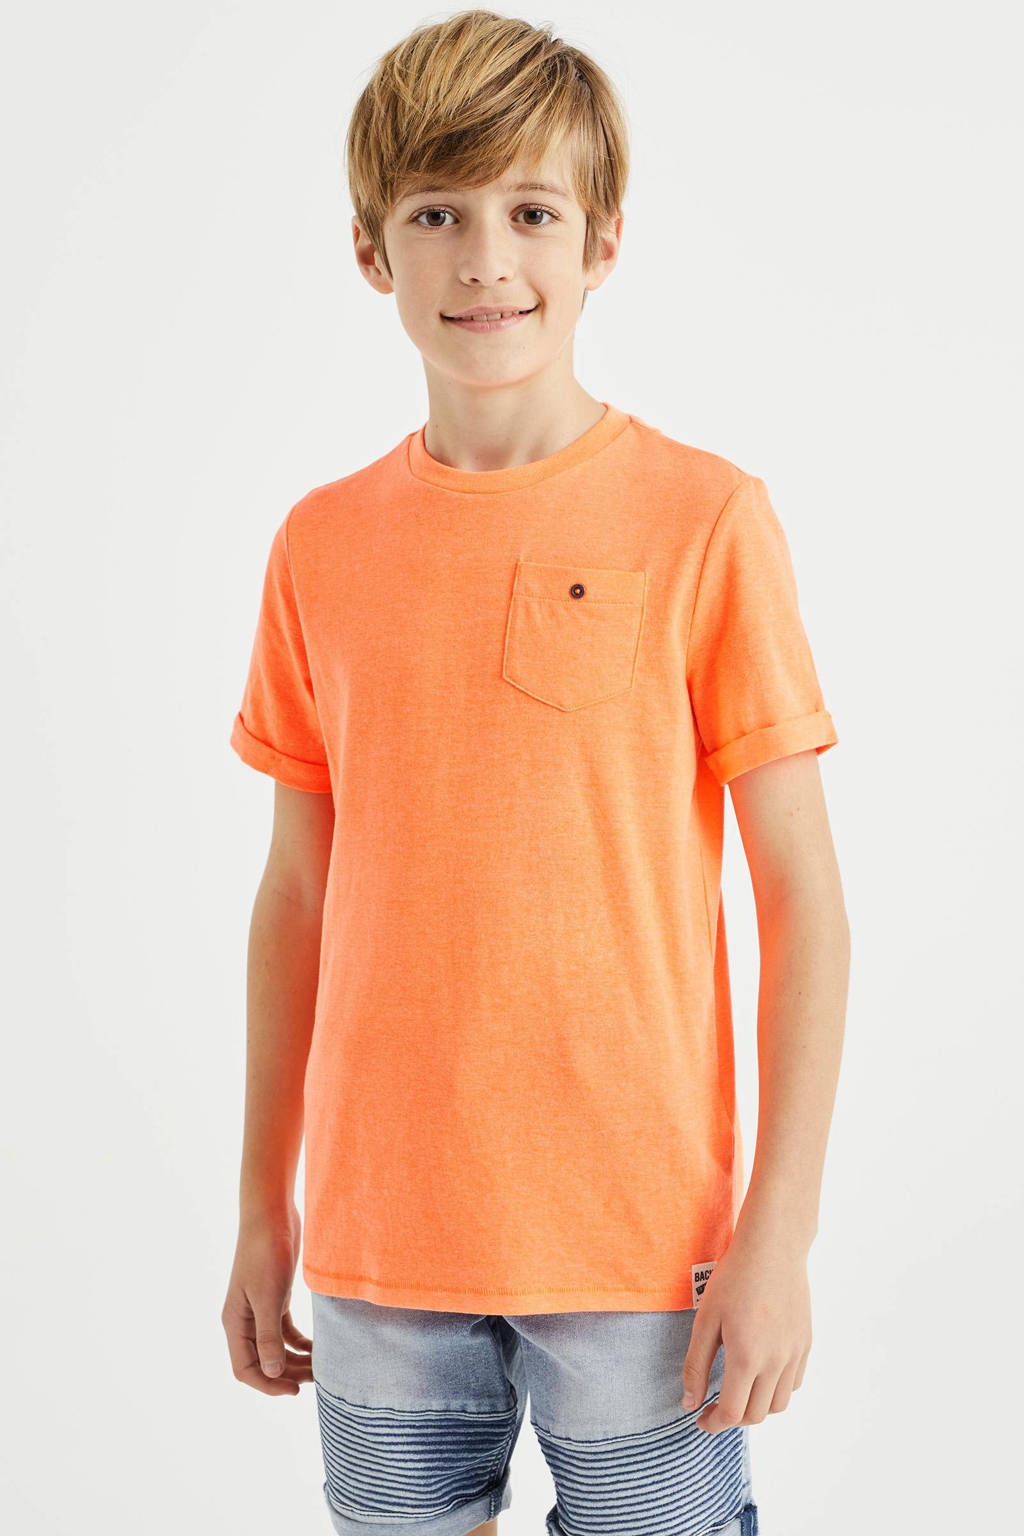 Smeltend markeerstift Kwelling WE Fashion T-shirt neon oranje | wehkamp